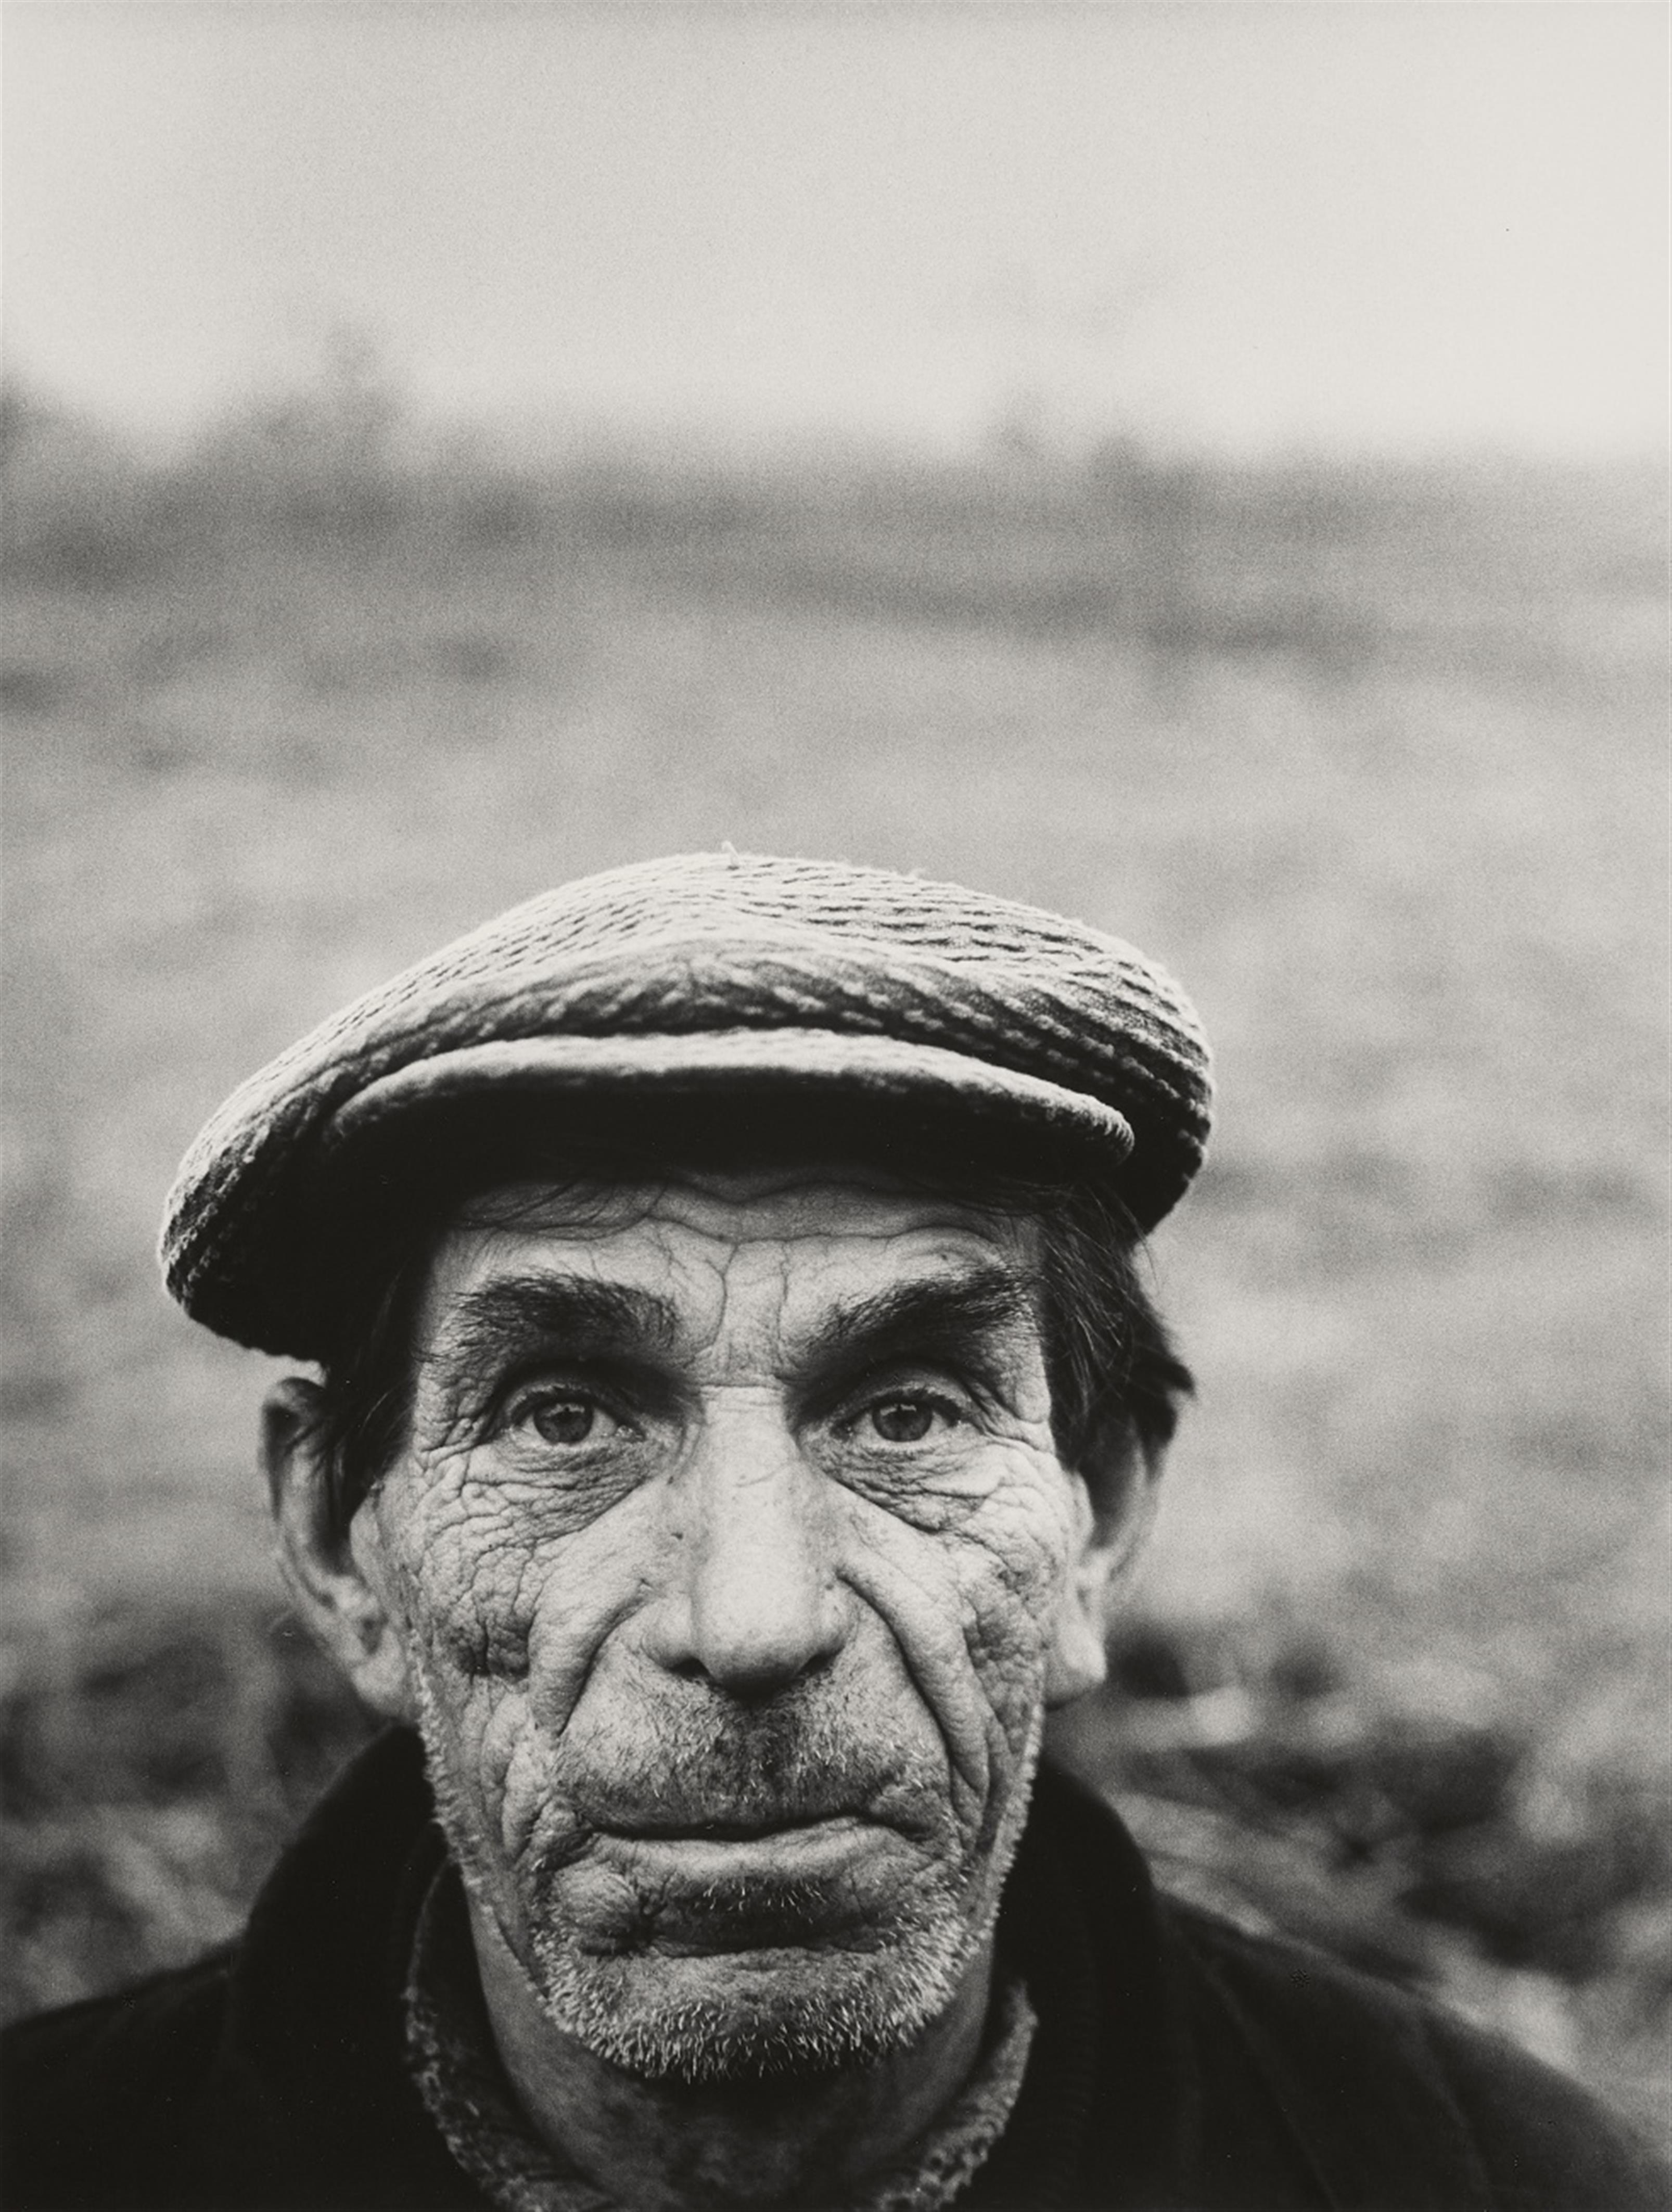 Antanas Sutkus - The farmer, Lithuania - image-1